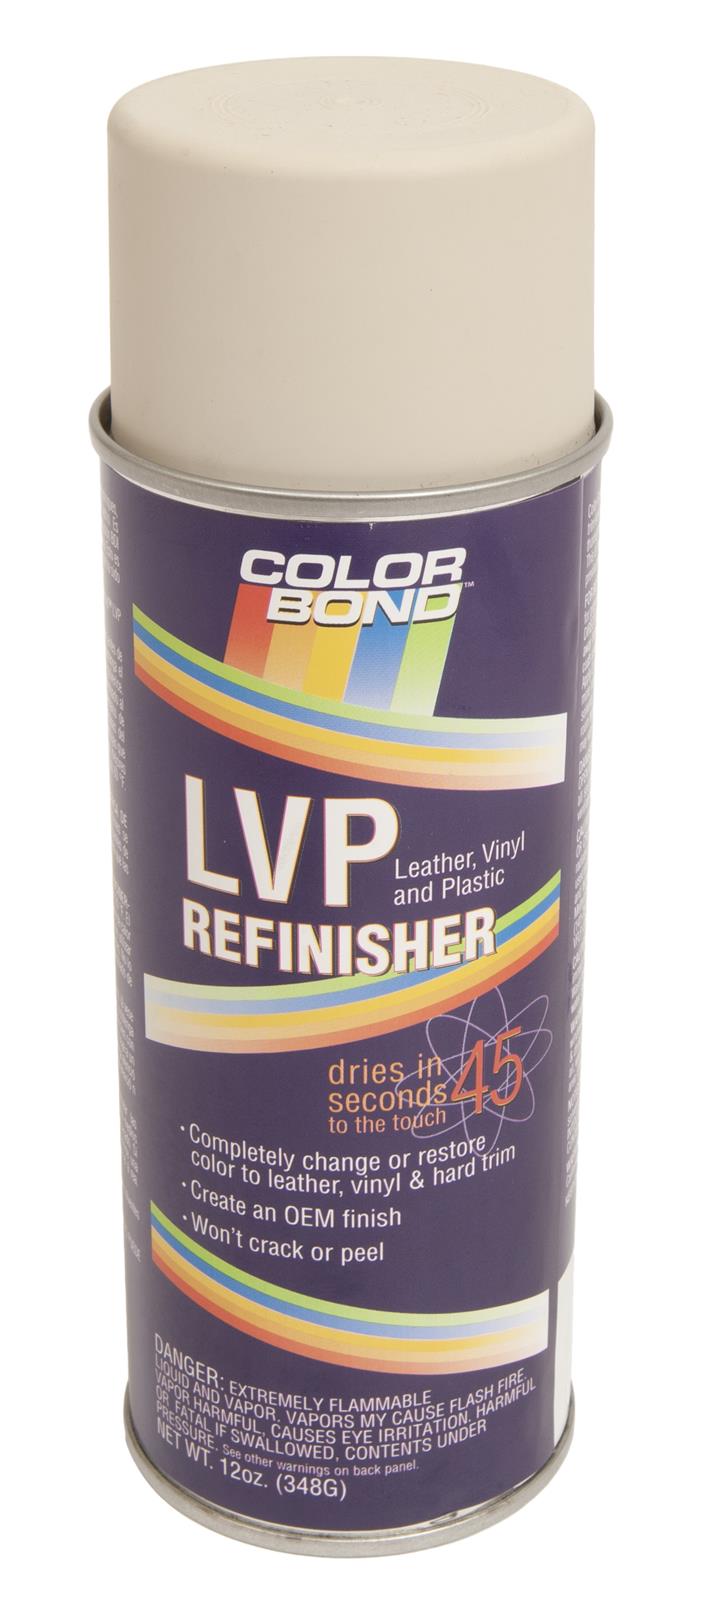 ColorBond Leather, Vinyl & Hard Plastic Refinisher